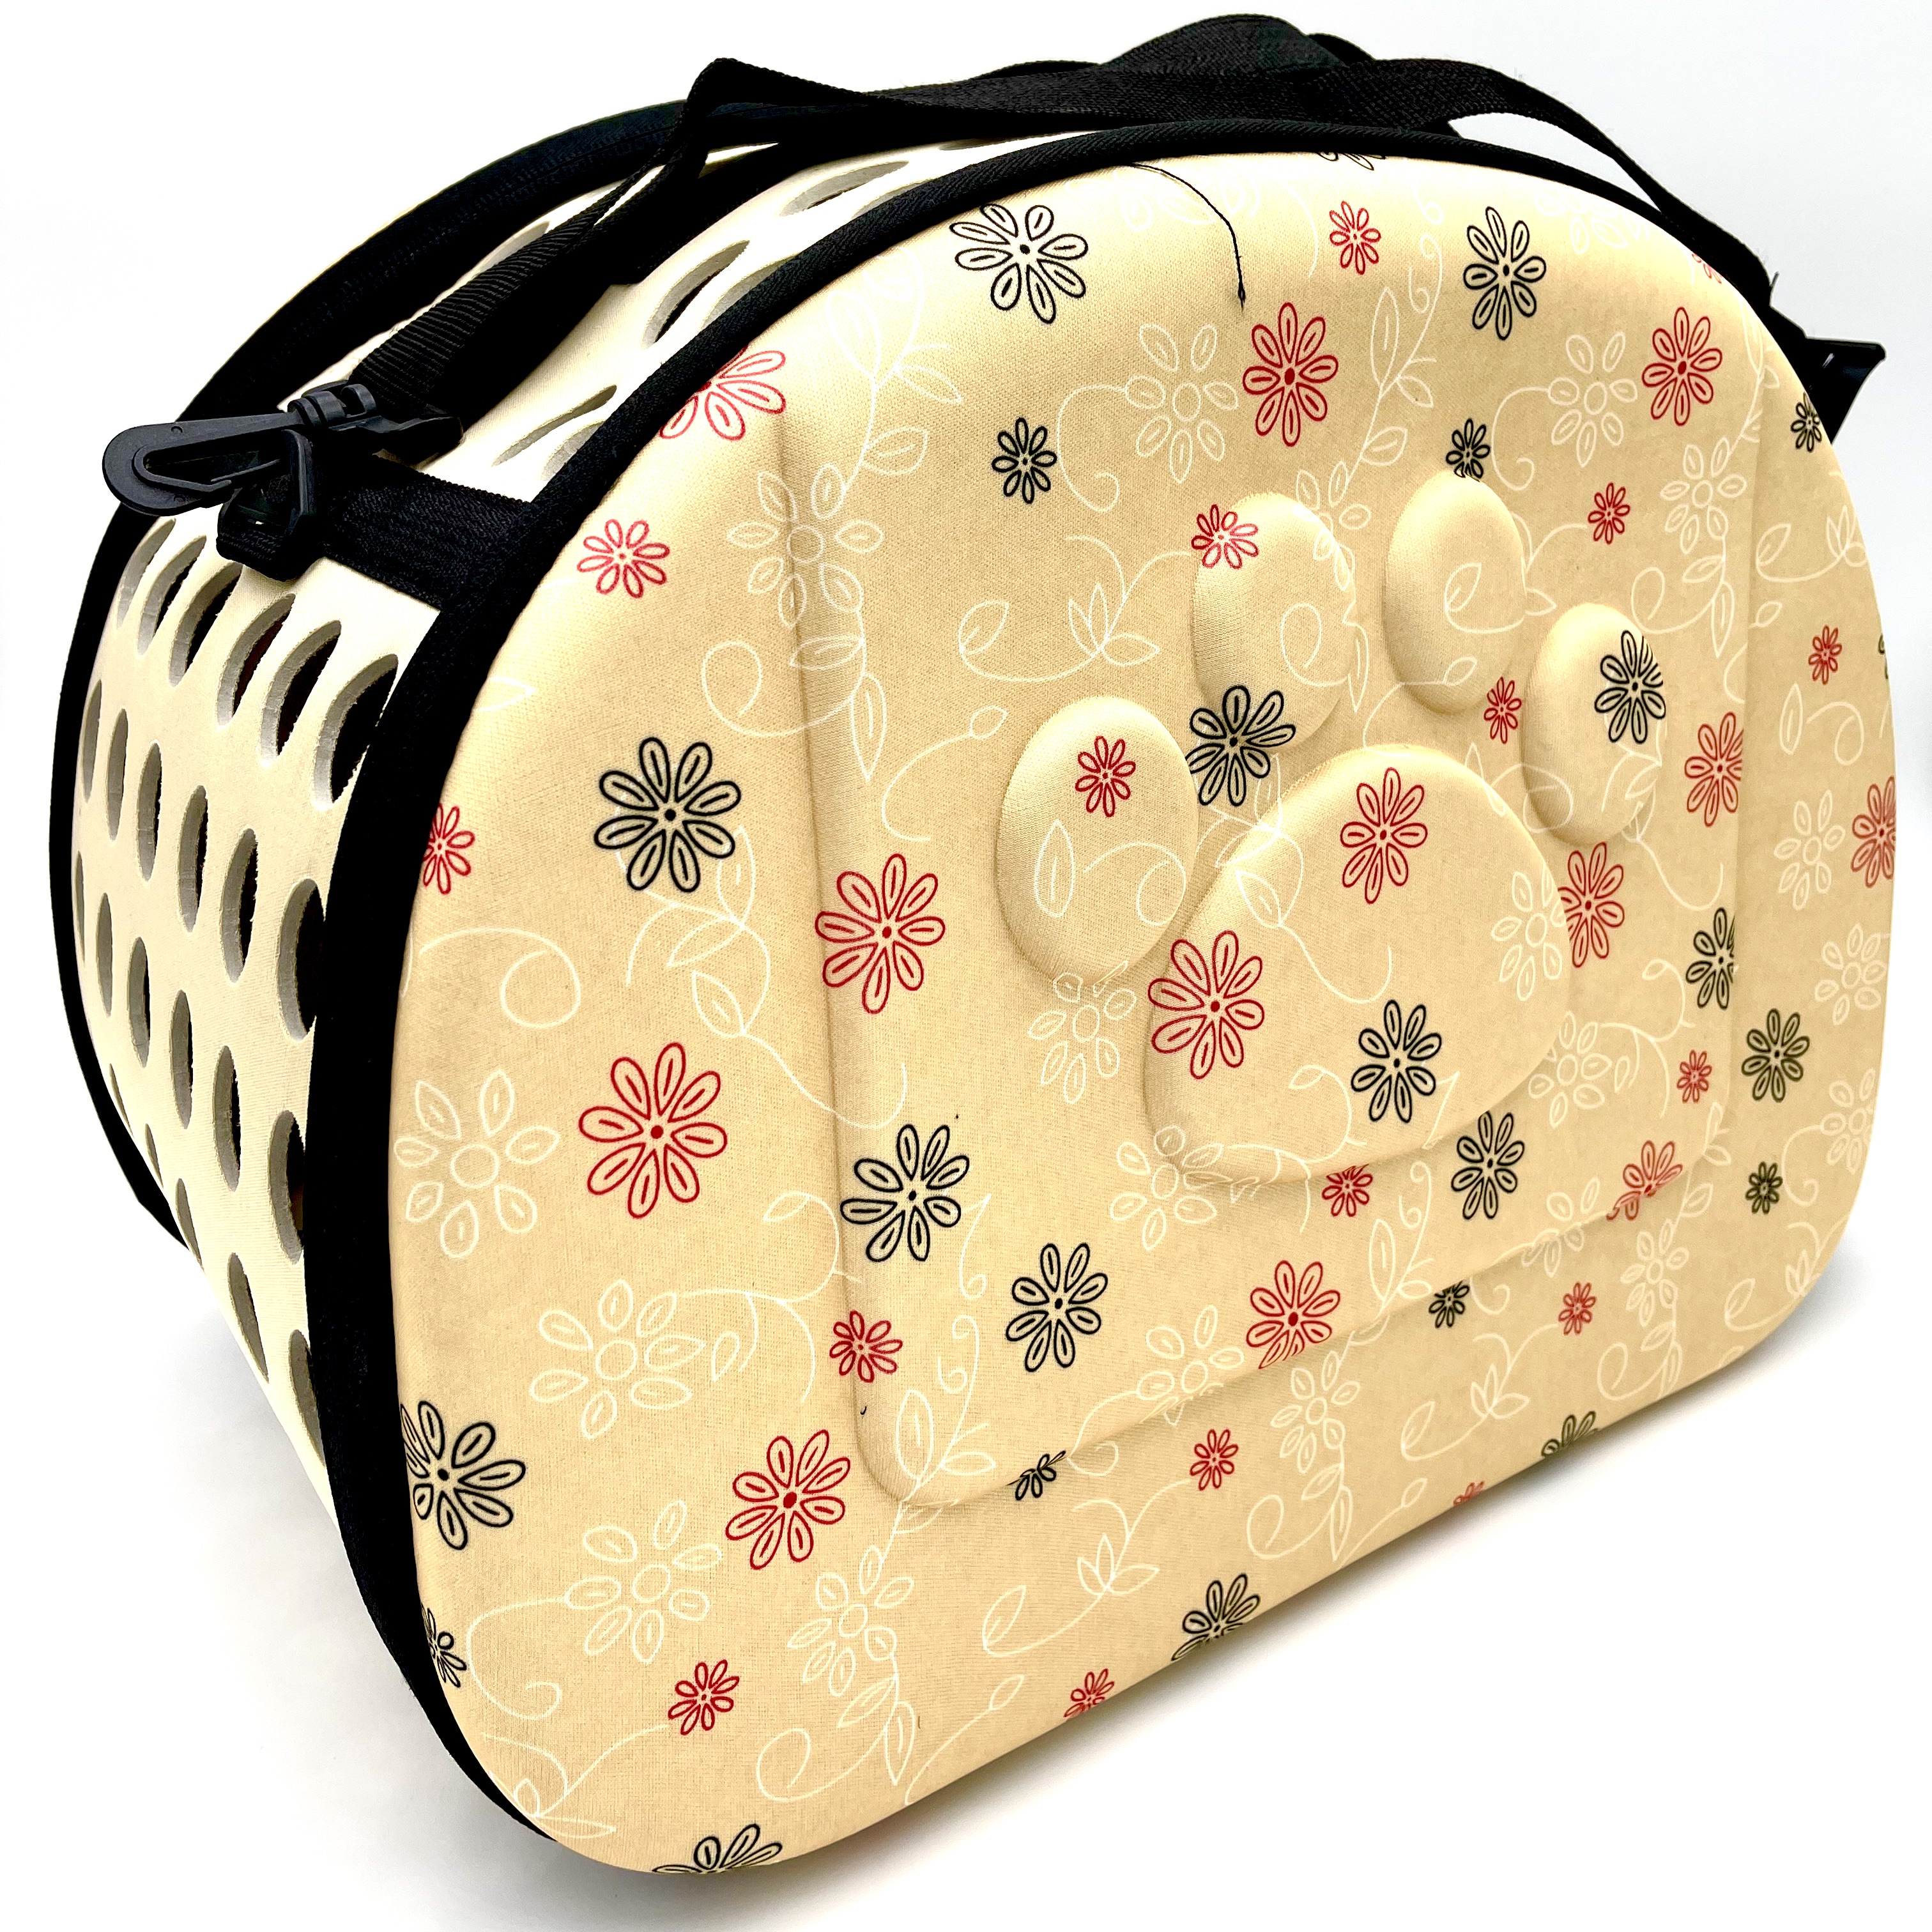 Breathable Fashionable Pet Carrier Bag